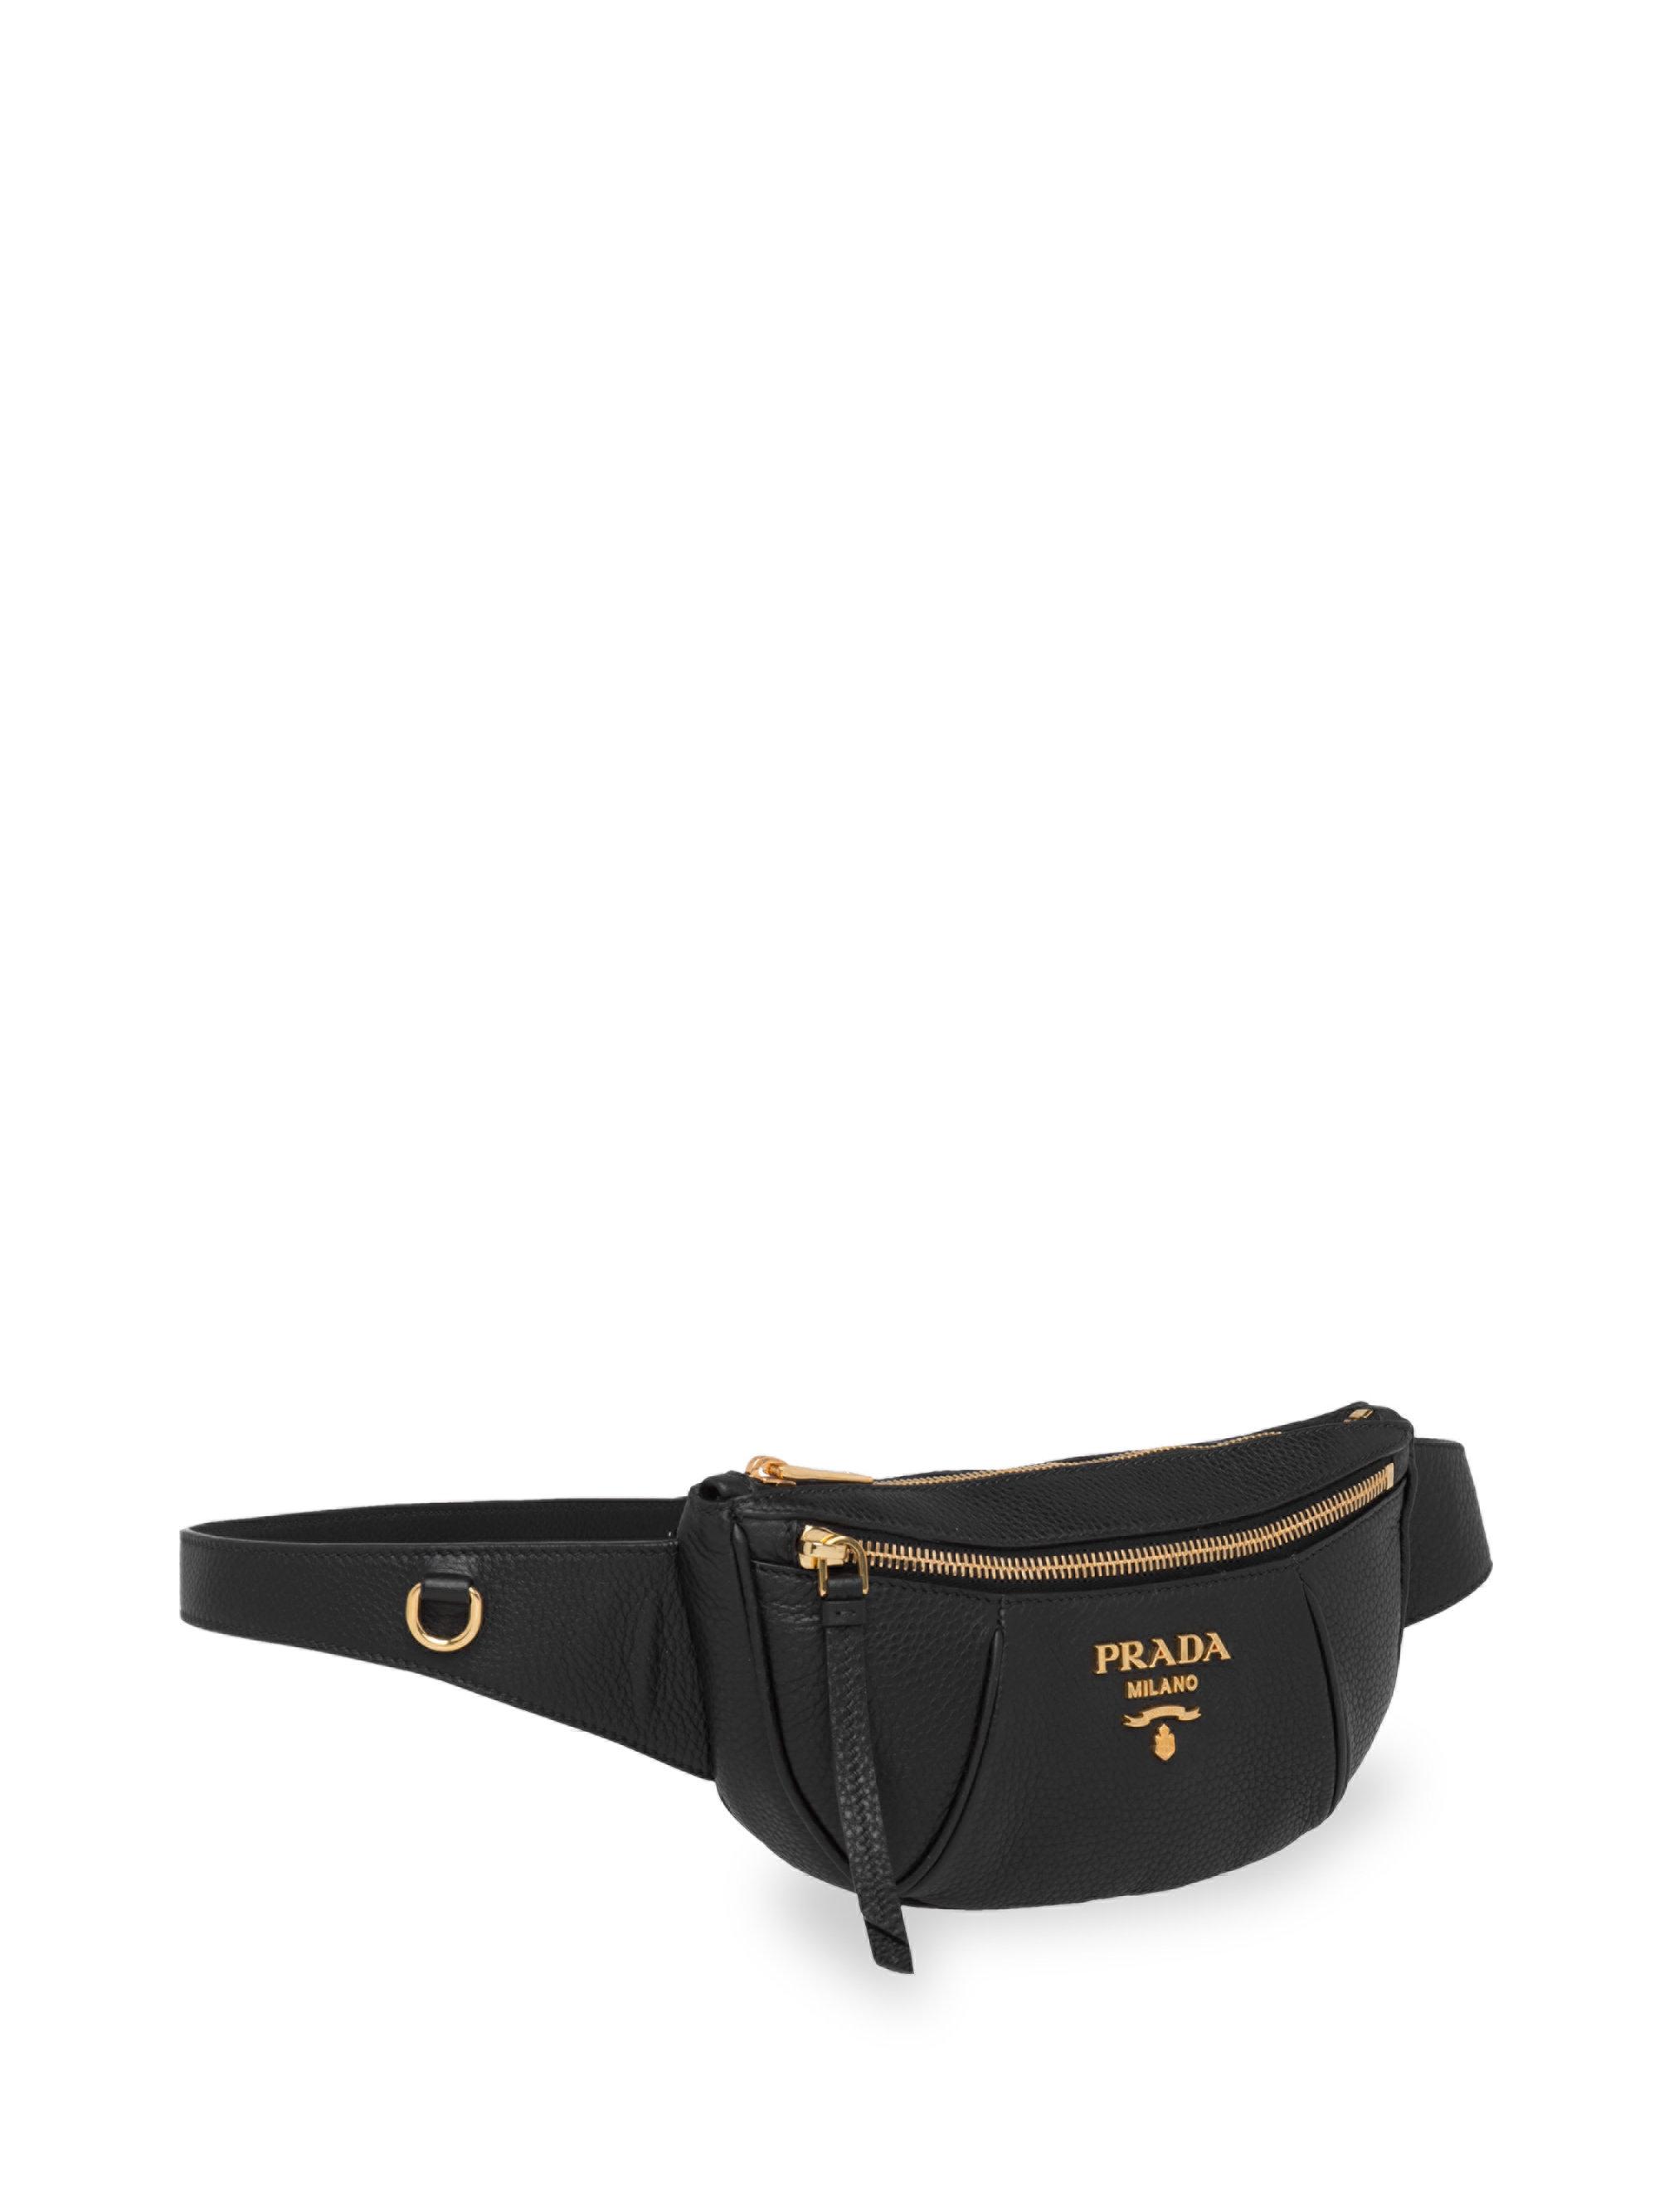 Prada Vitello Daino Pebbled Leather Belt Bag in Black